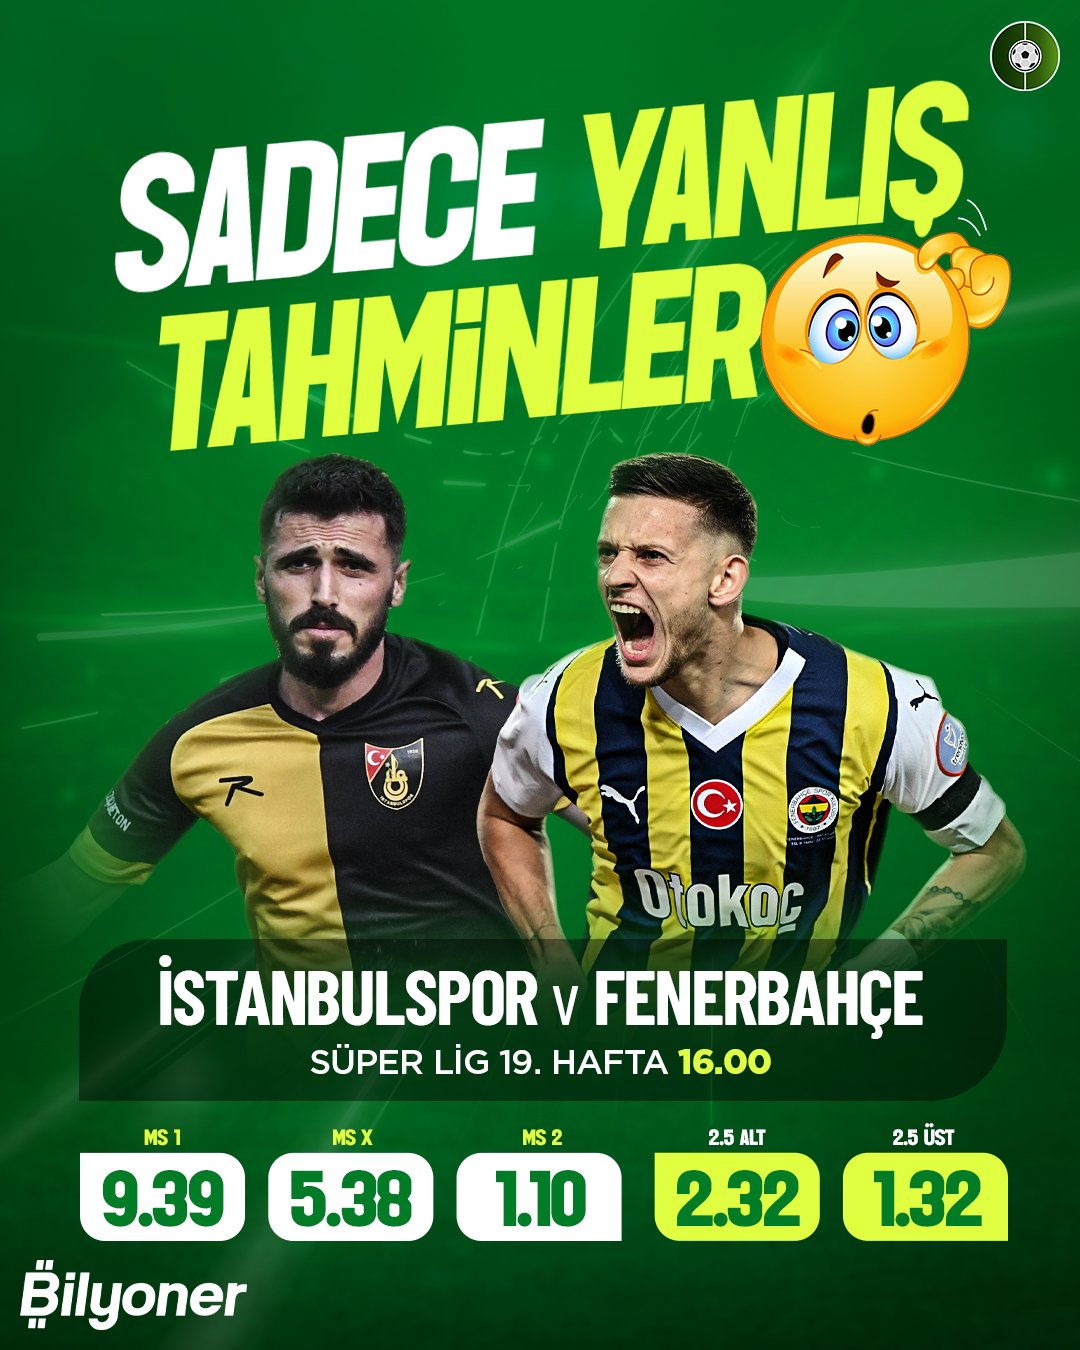 The Fenerbahçe vs Galatasaray Rivalry: A Clash of Turkish Football Titans